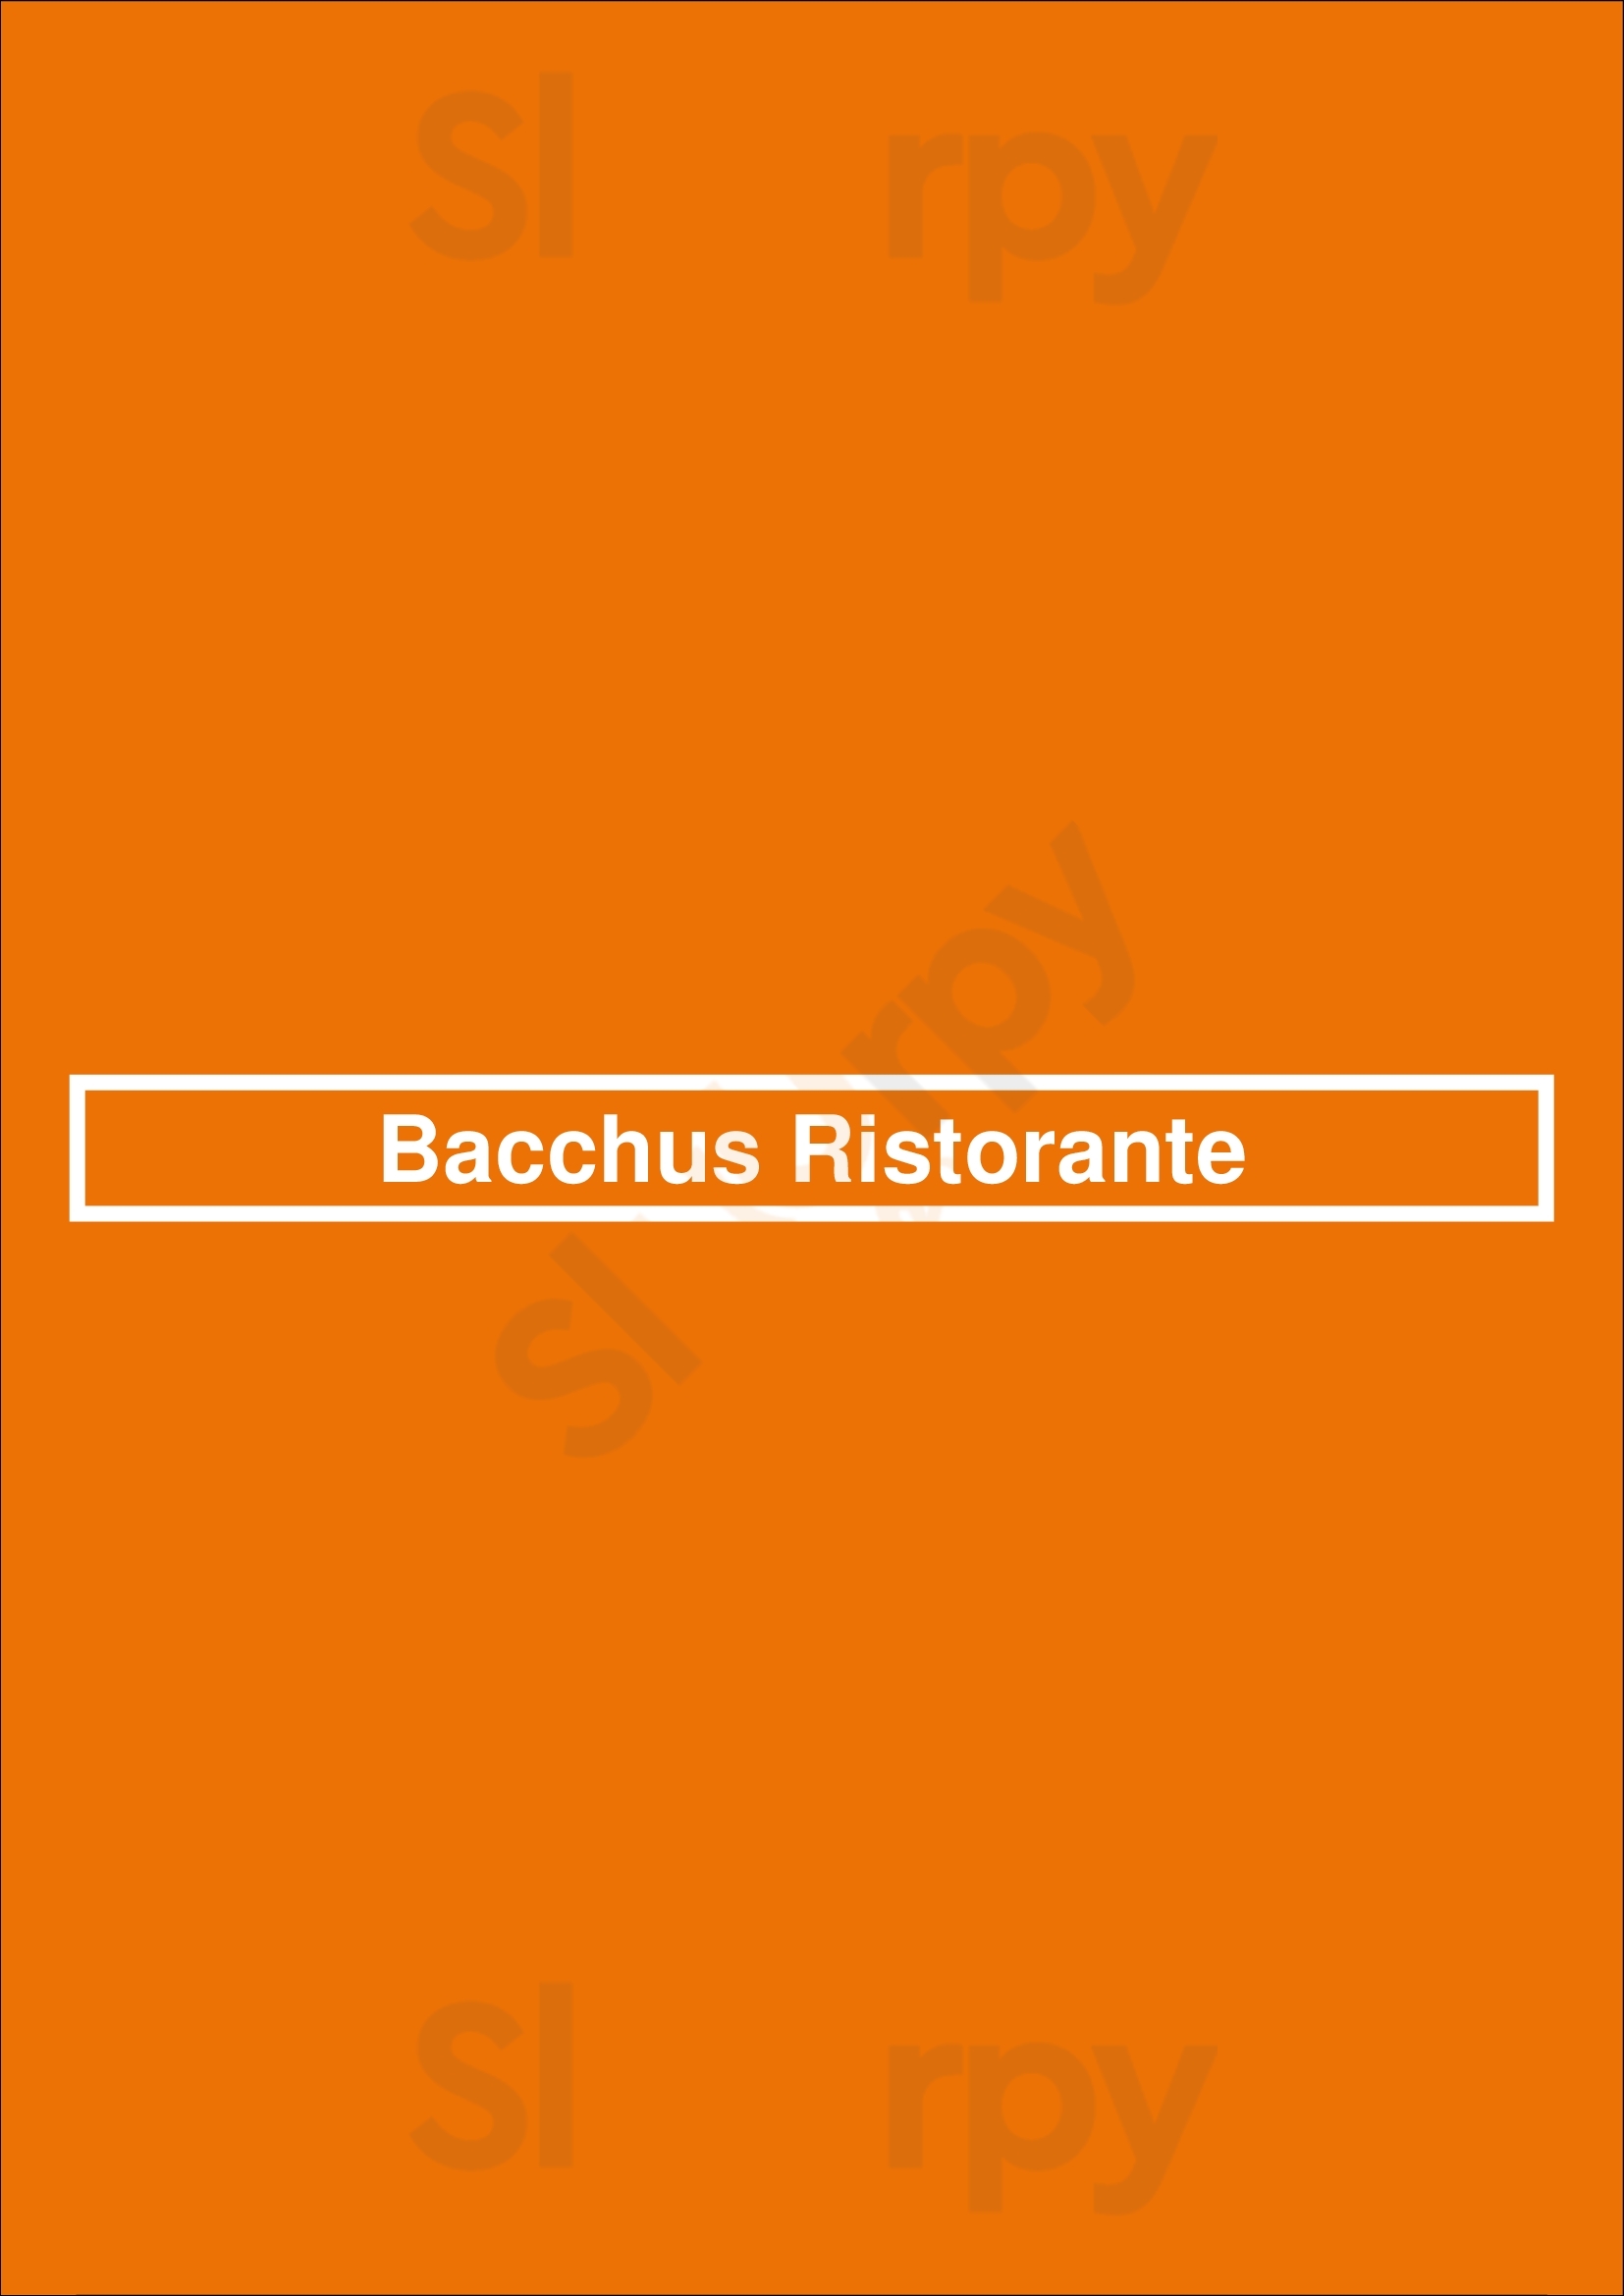 Bacchus Ristorante Windsor Menu - 1